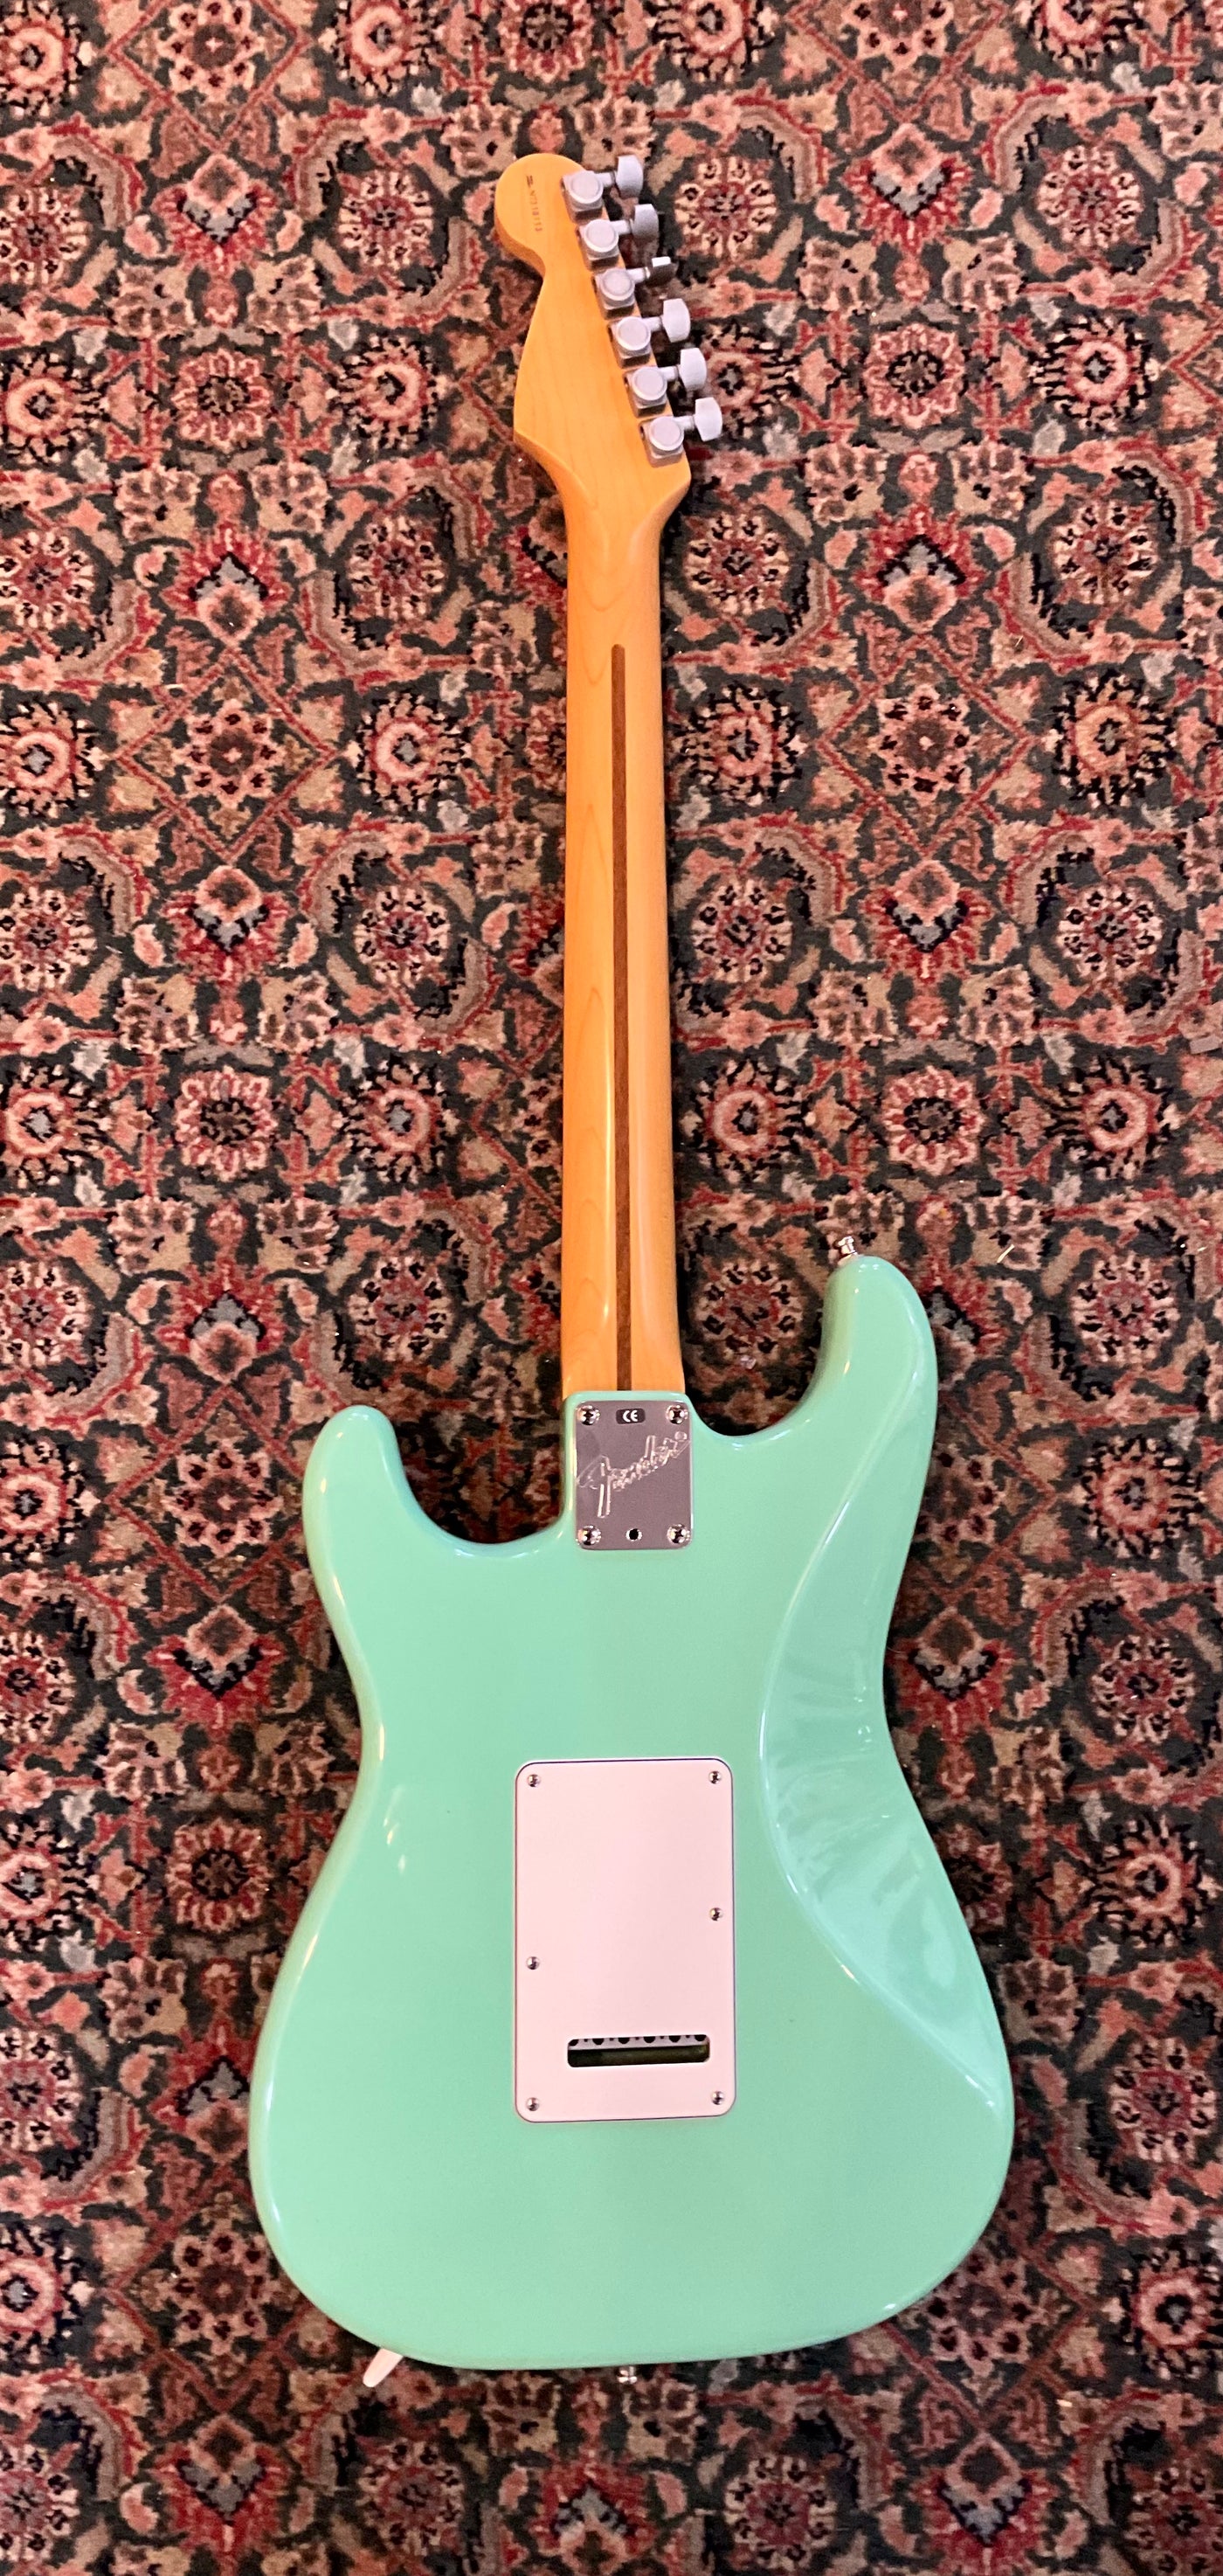 Fender USA “Jeff Beck” Signature Stratocaster